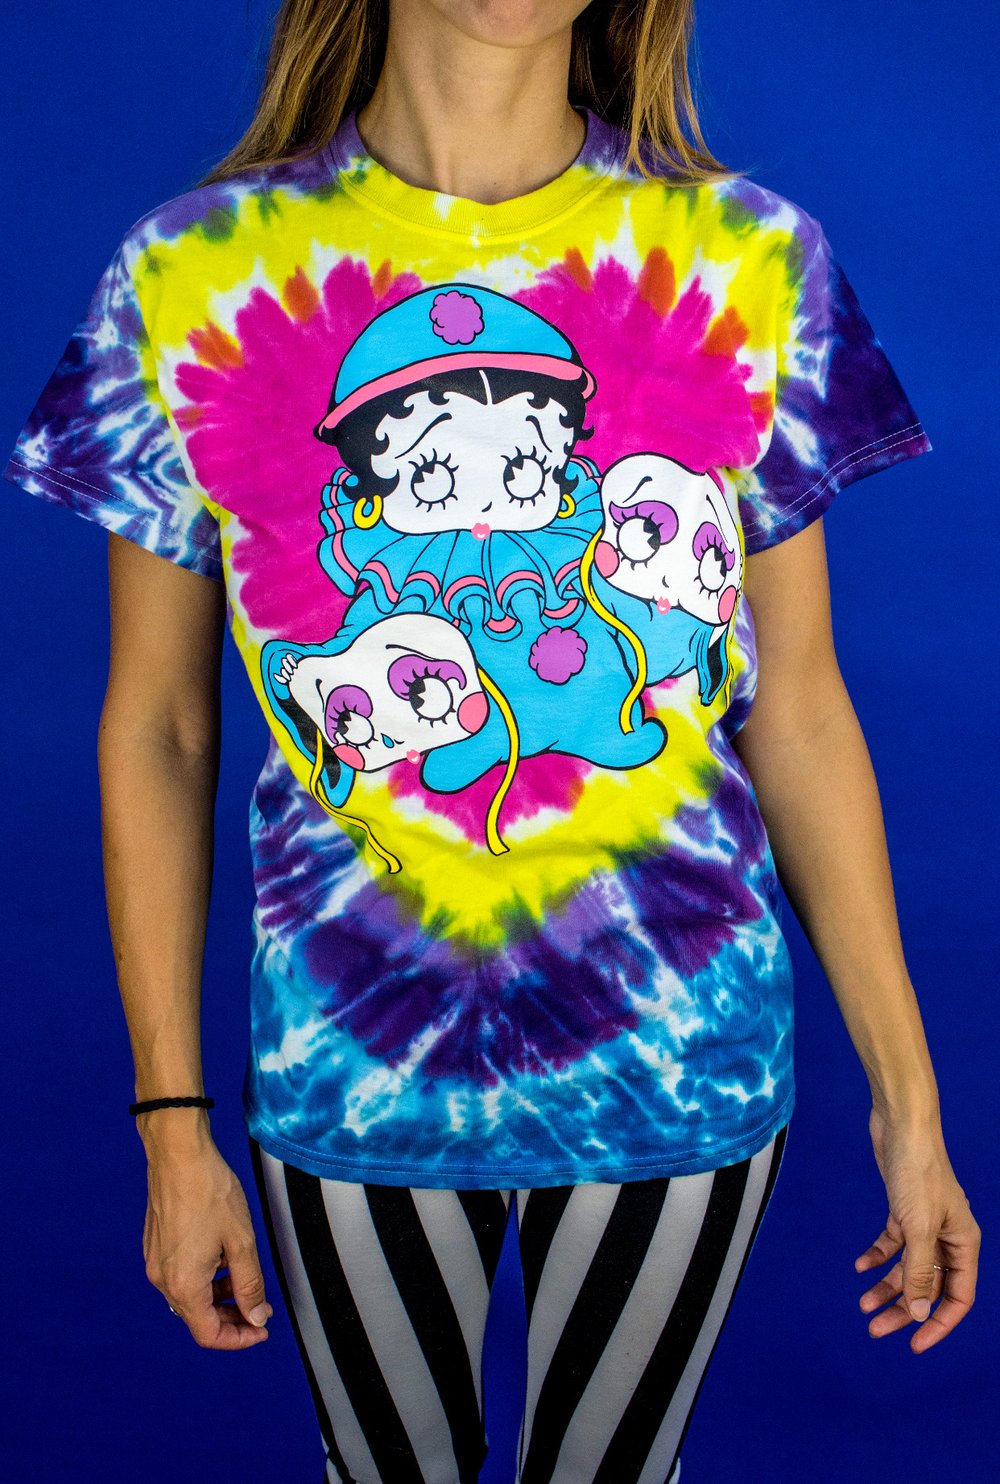 Betty Boop - Betty Boop Clown Tie Dye Shirt